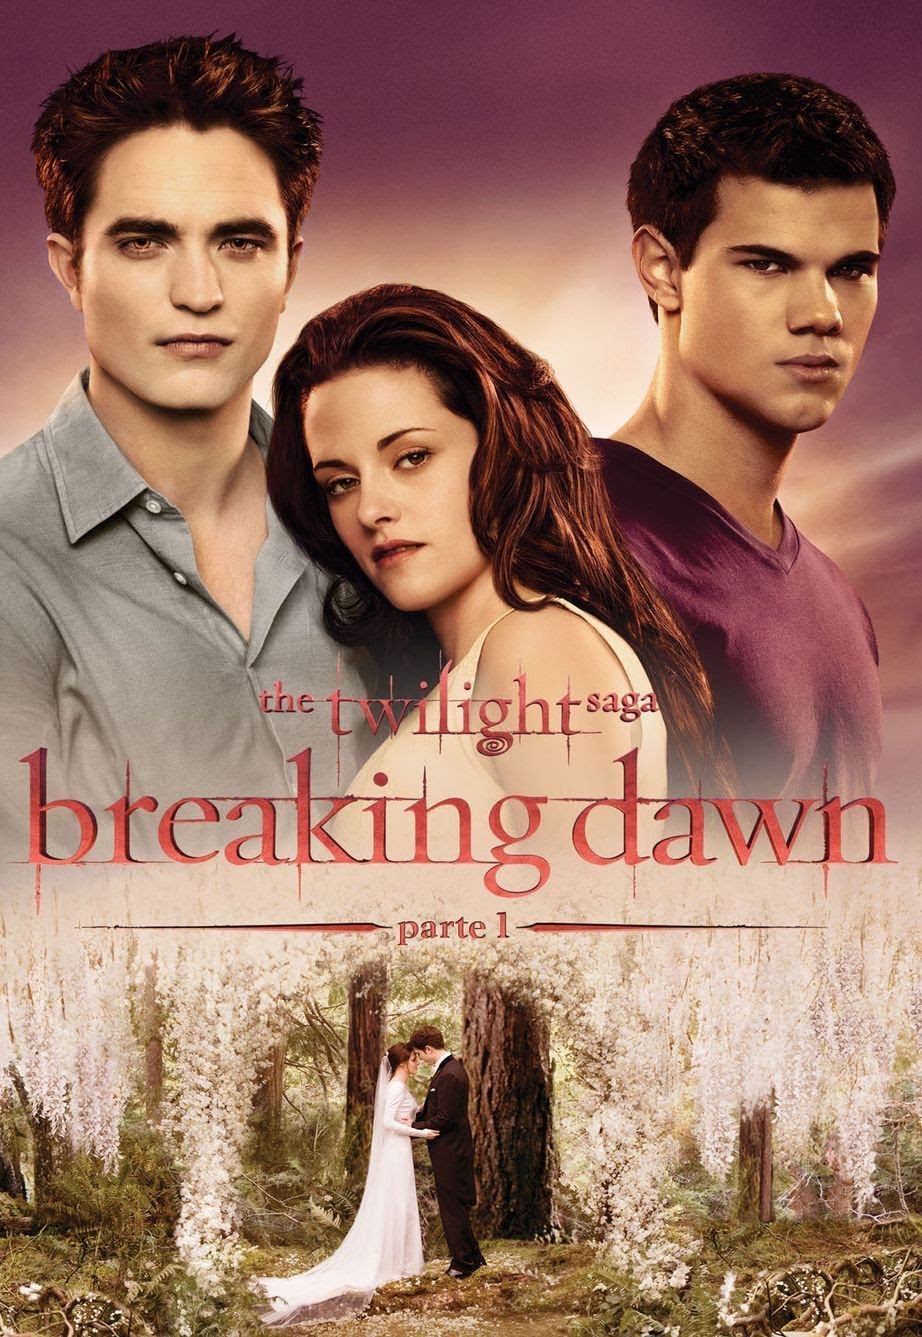 The Twilight Saga: Breaking Dawn – Parte 1 [HD] (2011)